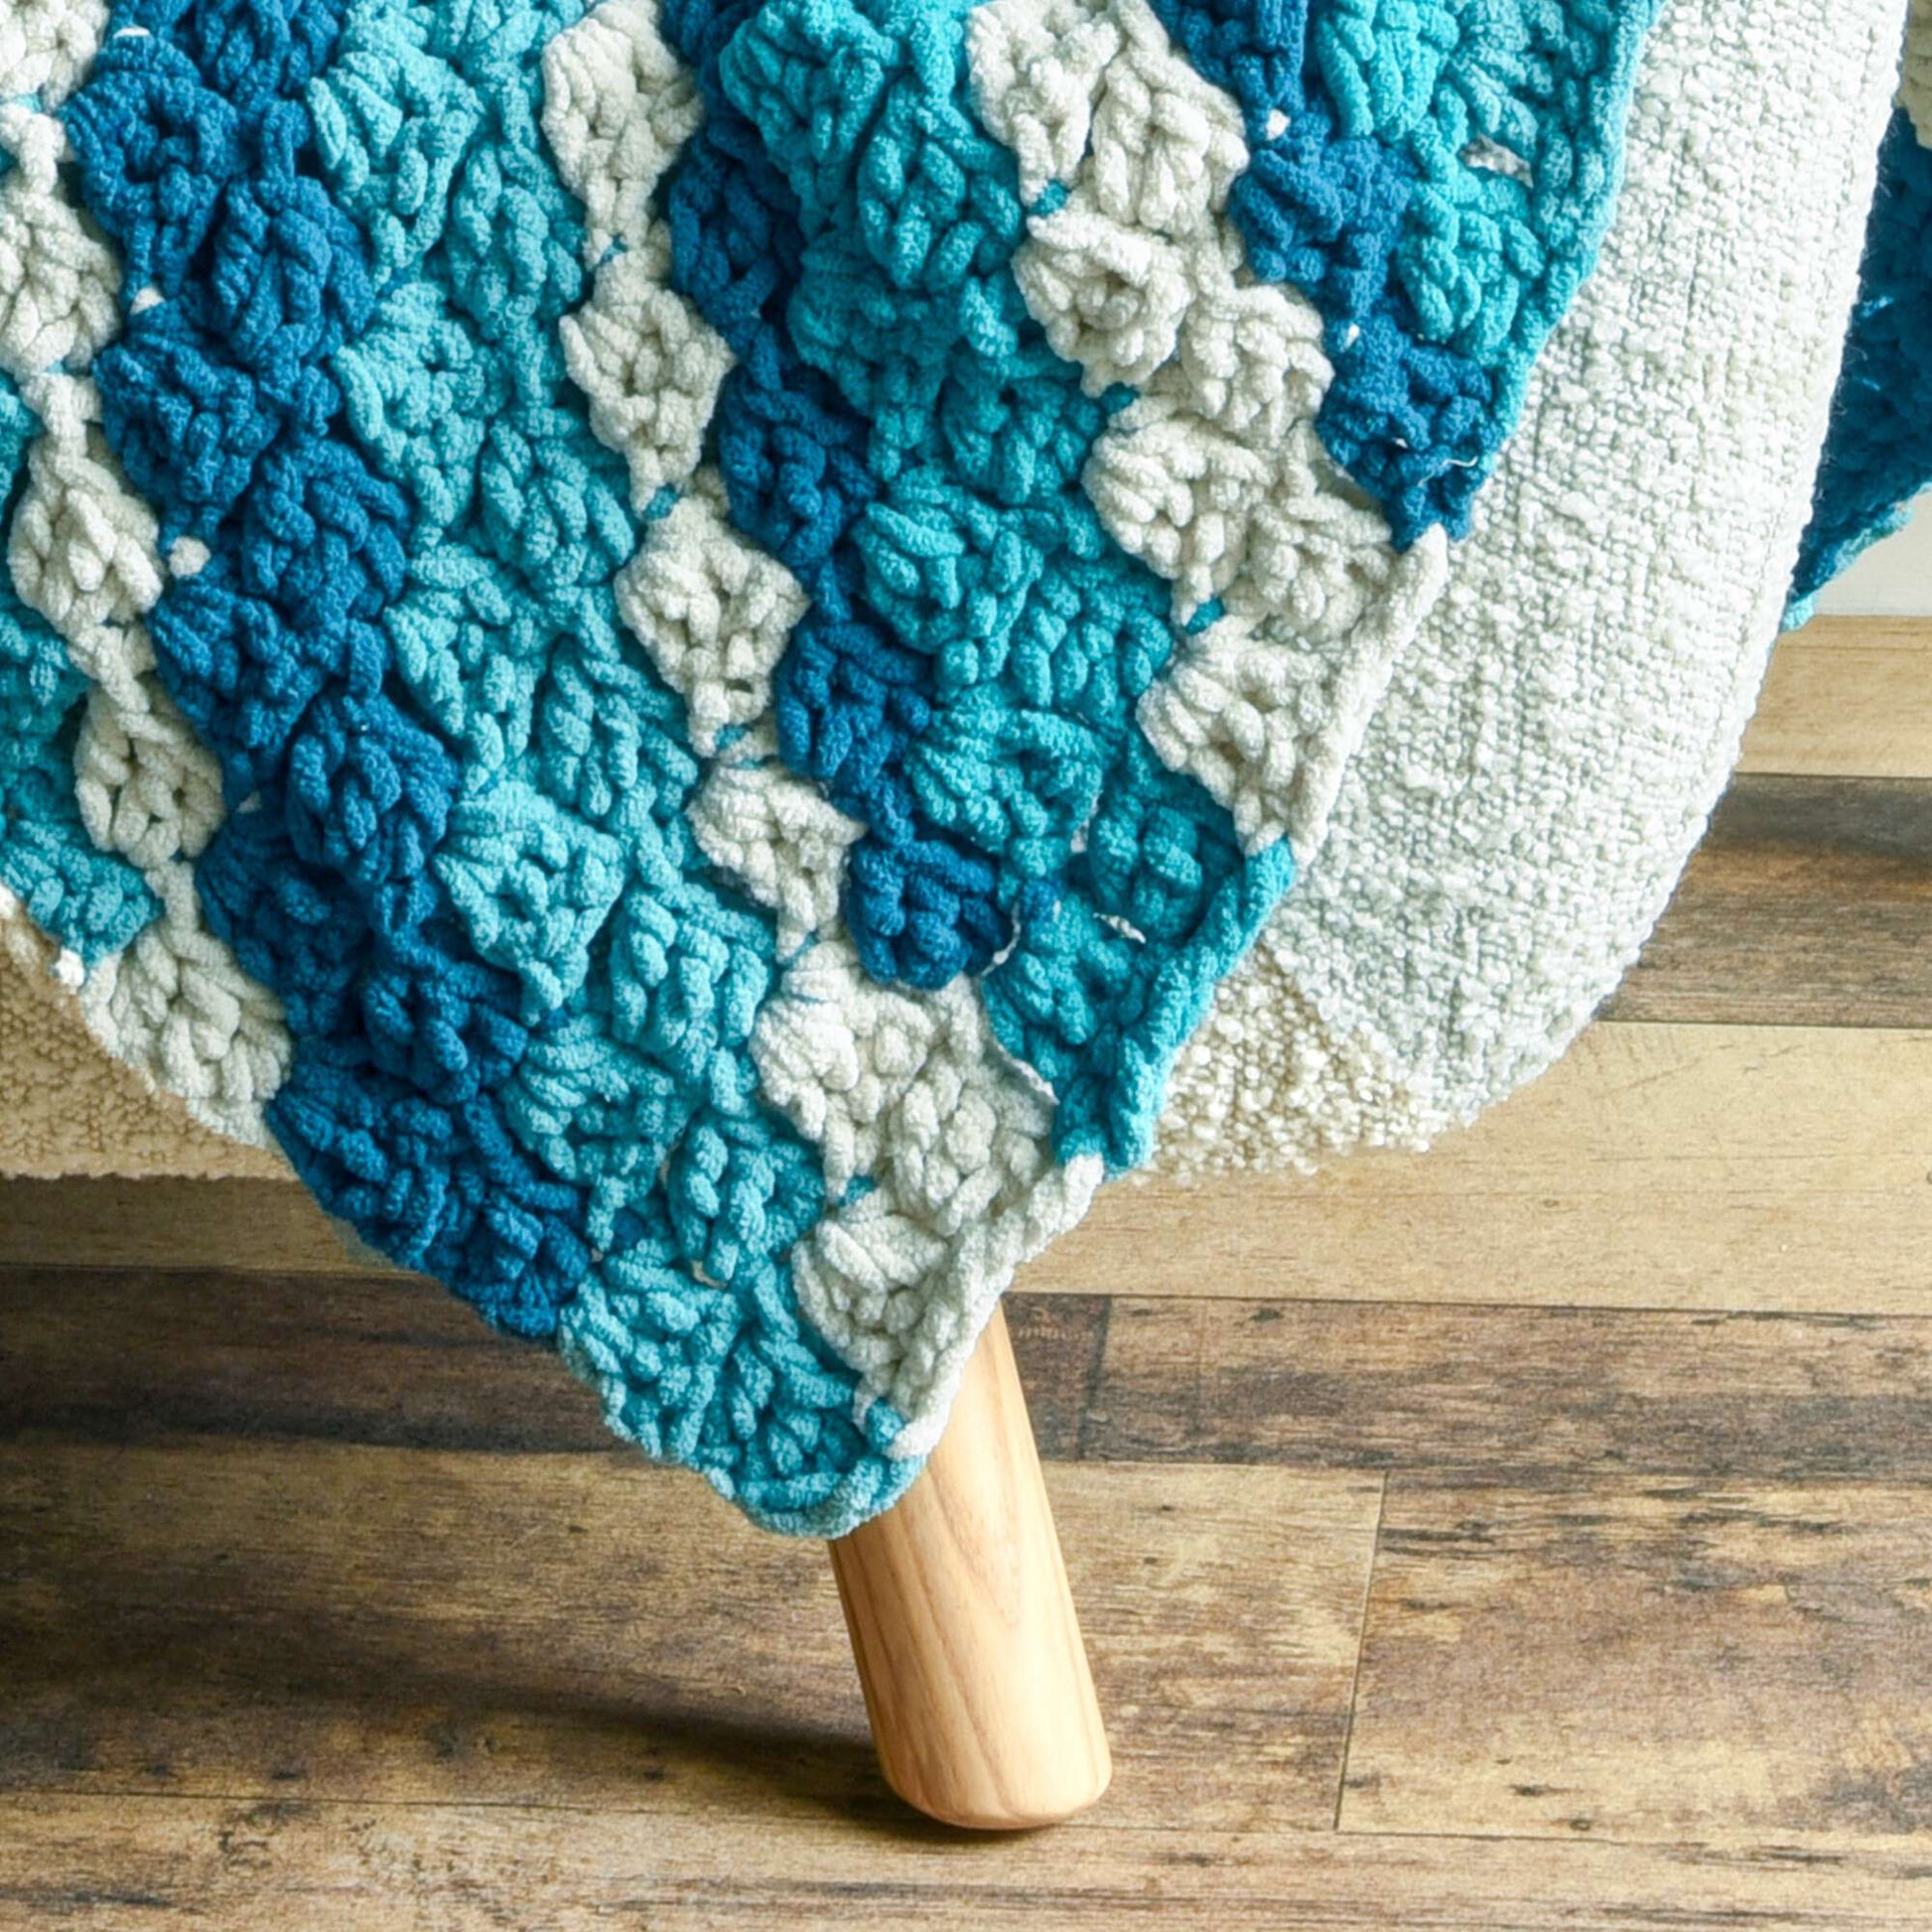 Bernat Blanket Yarn Blanket Crochet Patterns - Easy Crochet Patterns  Crochet  blanket patterns bernat, Bernat baby blanket yarn, Crochet blanket pattern  easy